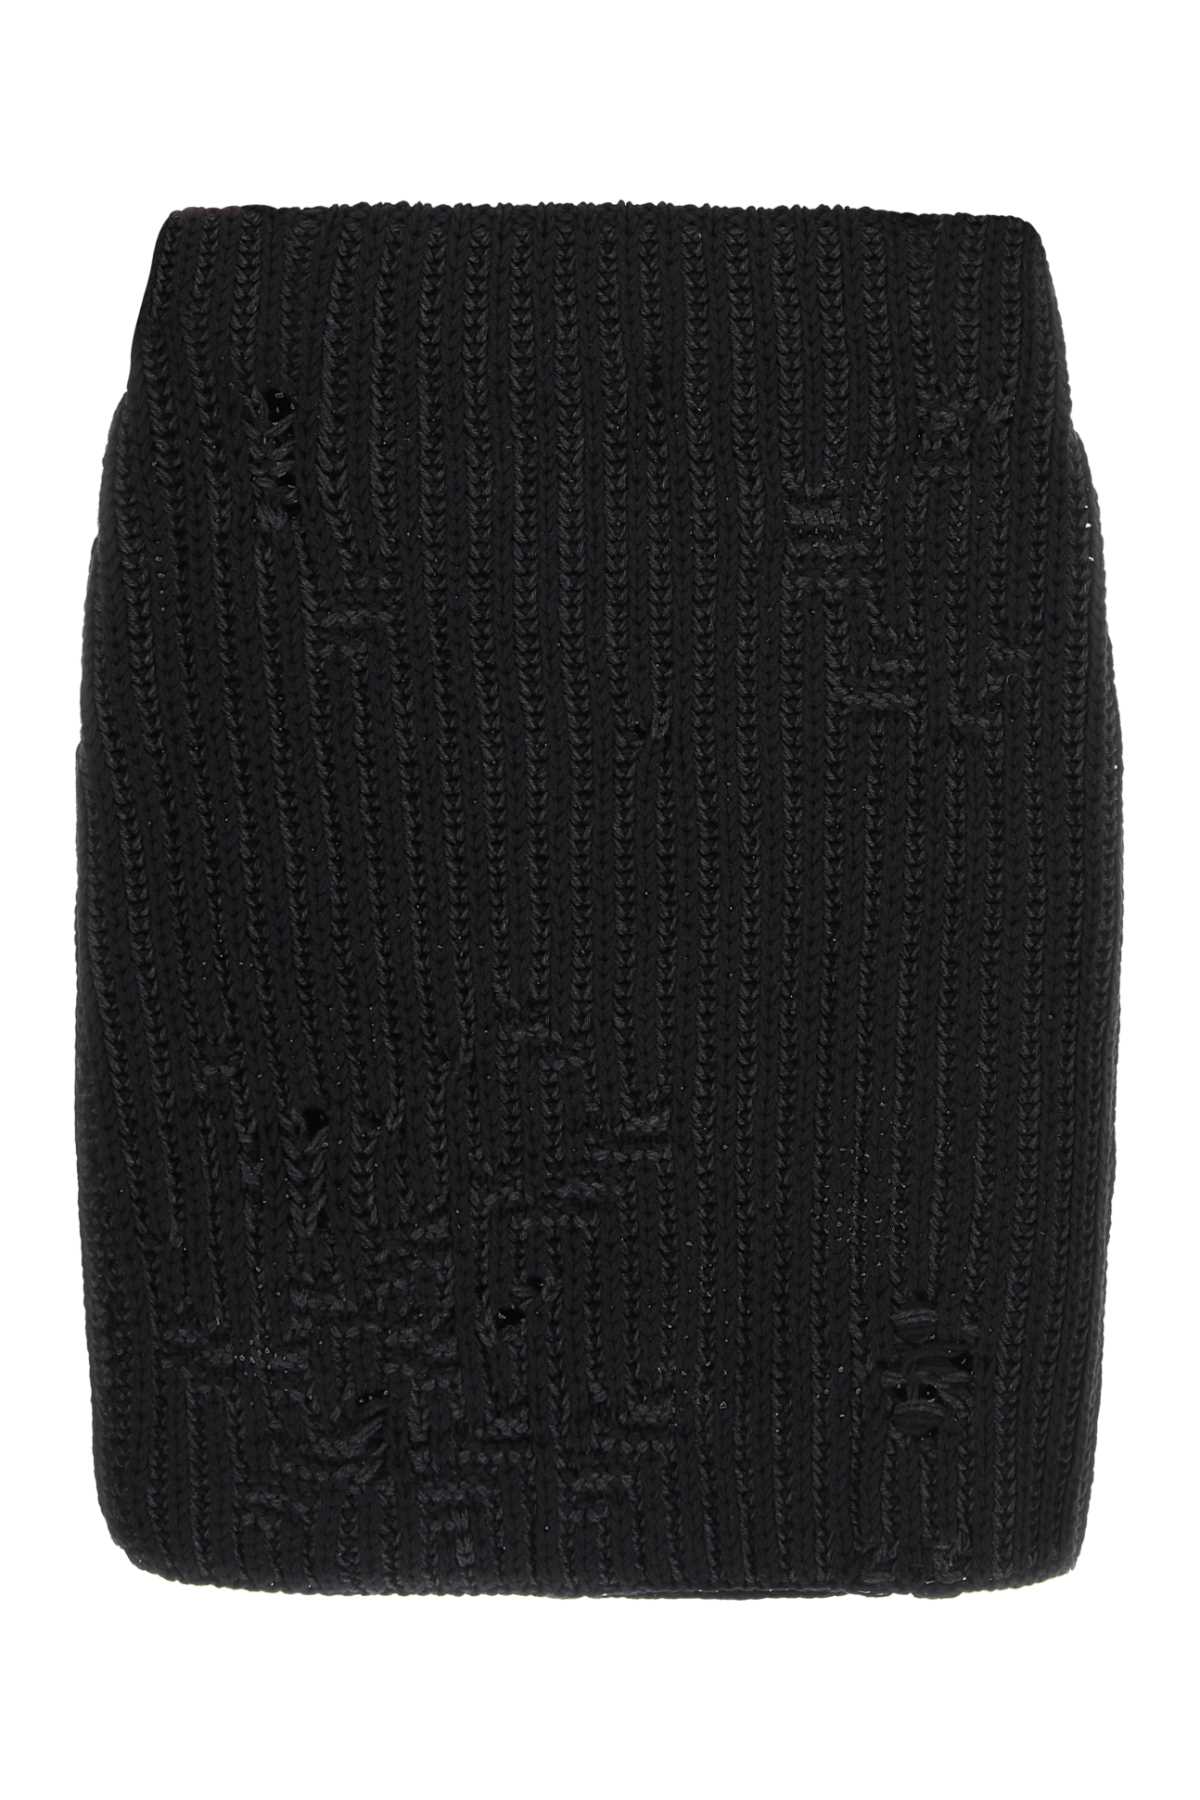 J.W. Anderson Black Cotton And Acrylic Mini Skirt